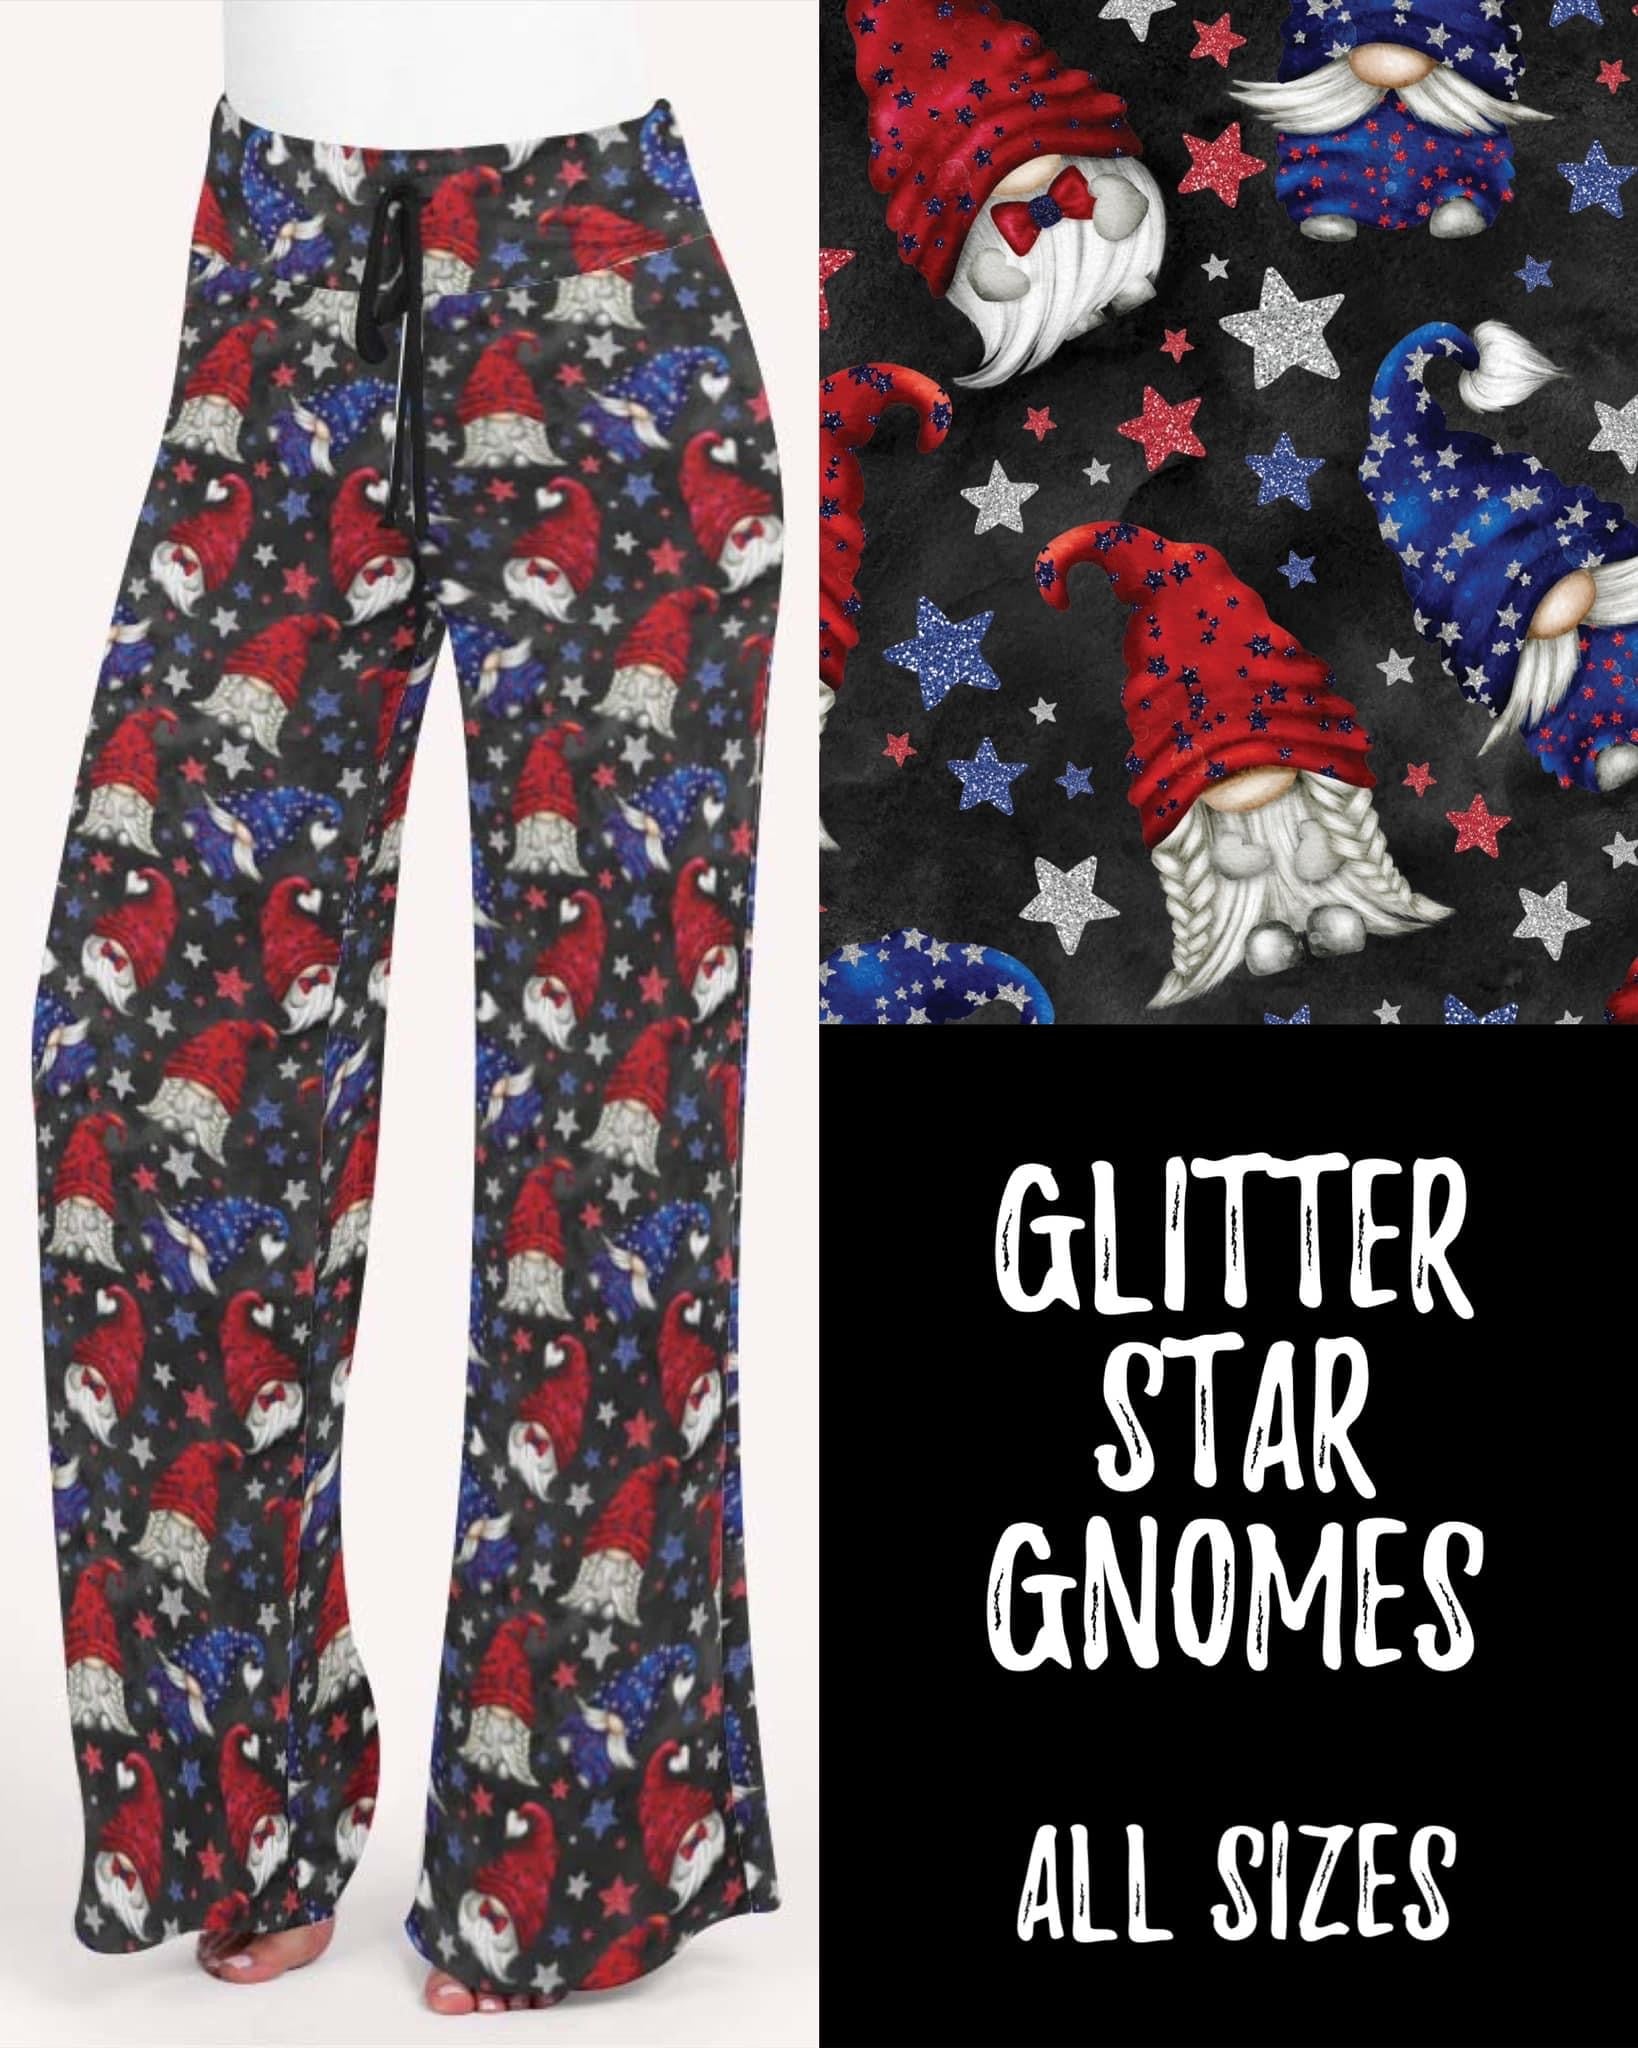 Glitter Star Gnomes leggings, capris and lounge pants